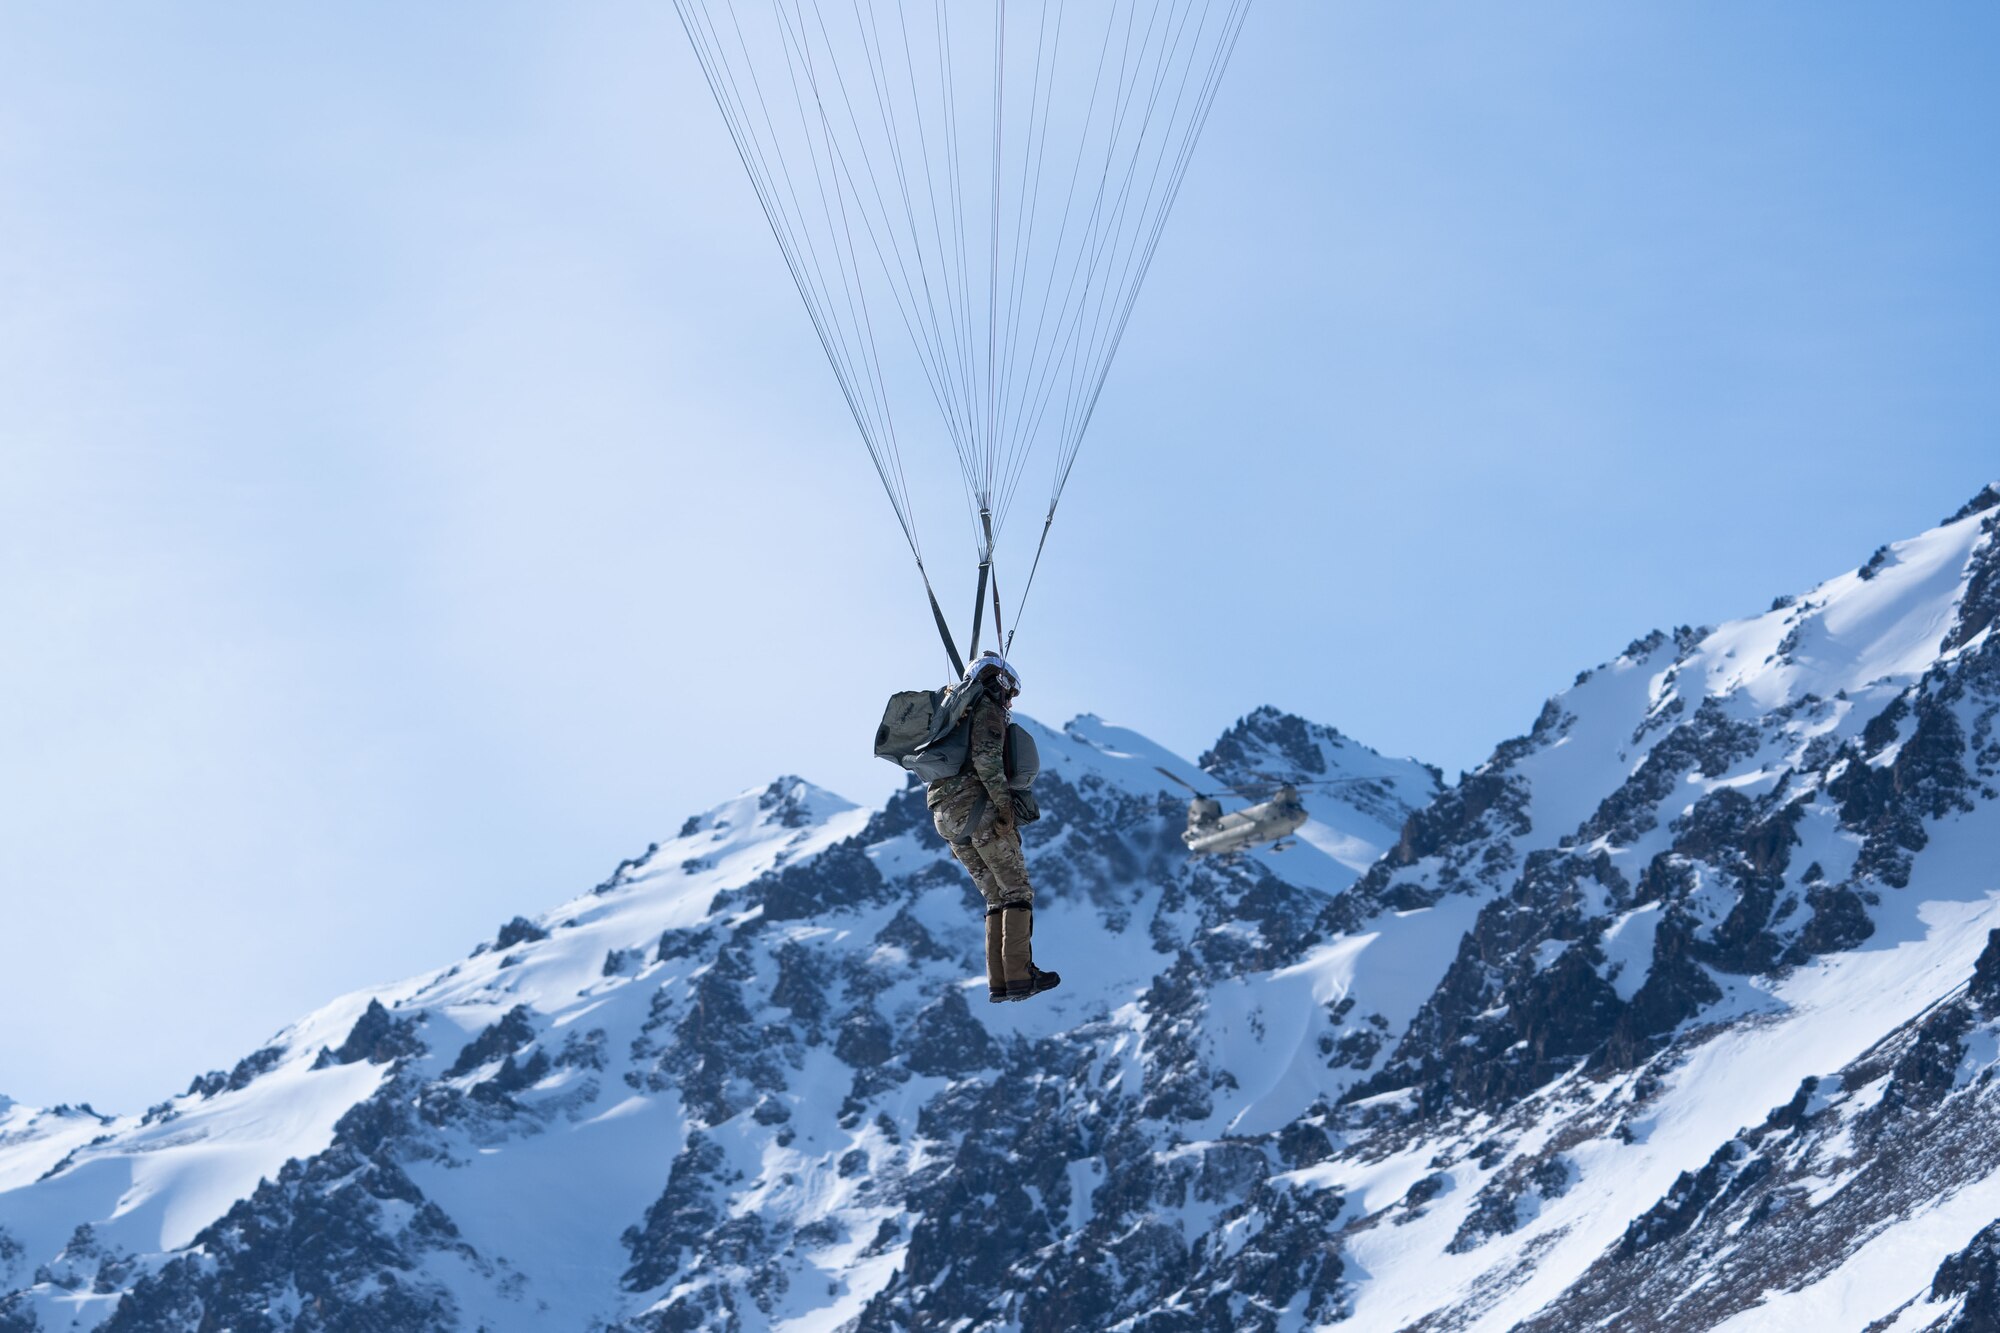 Photo of an Airman descending over Geronimo Drop Zone